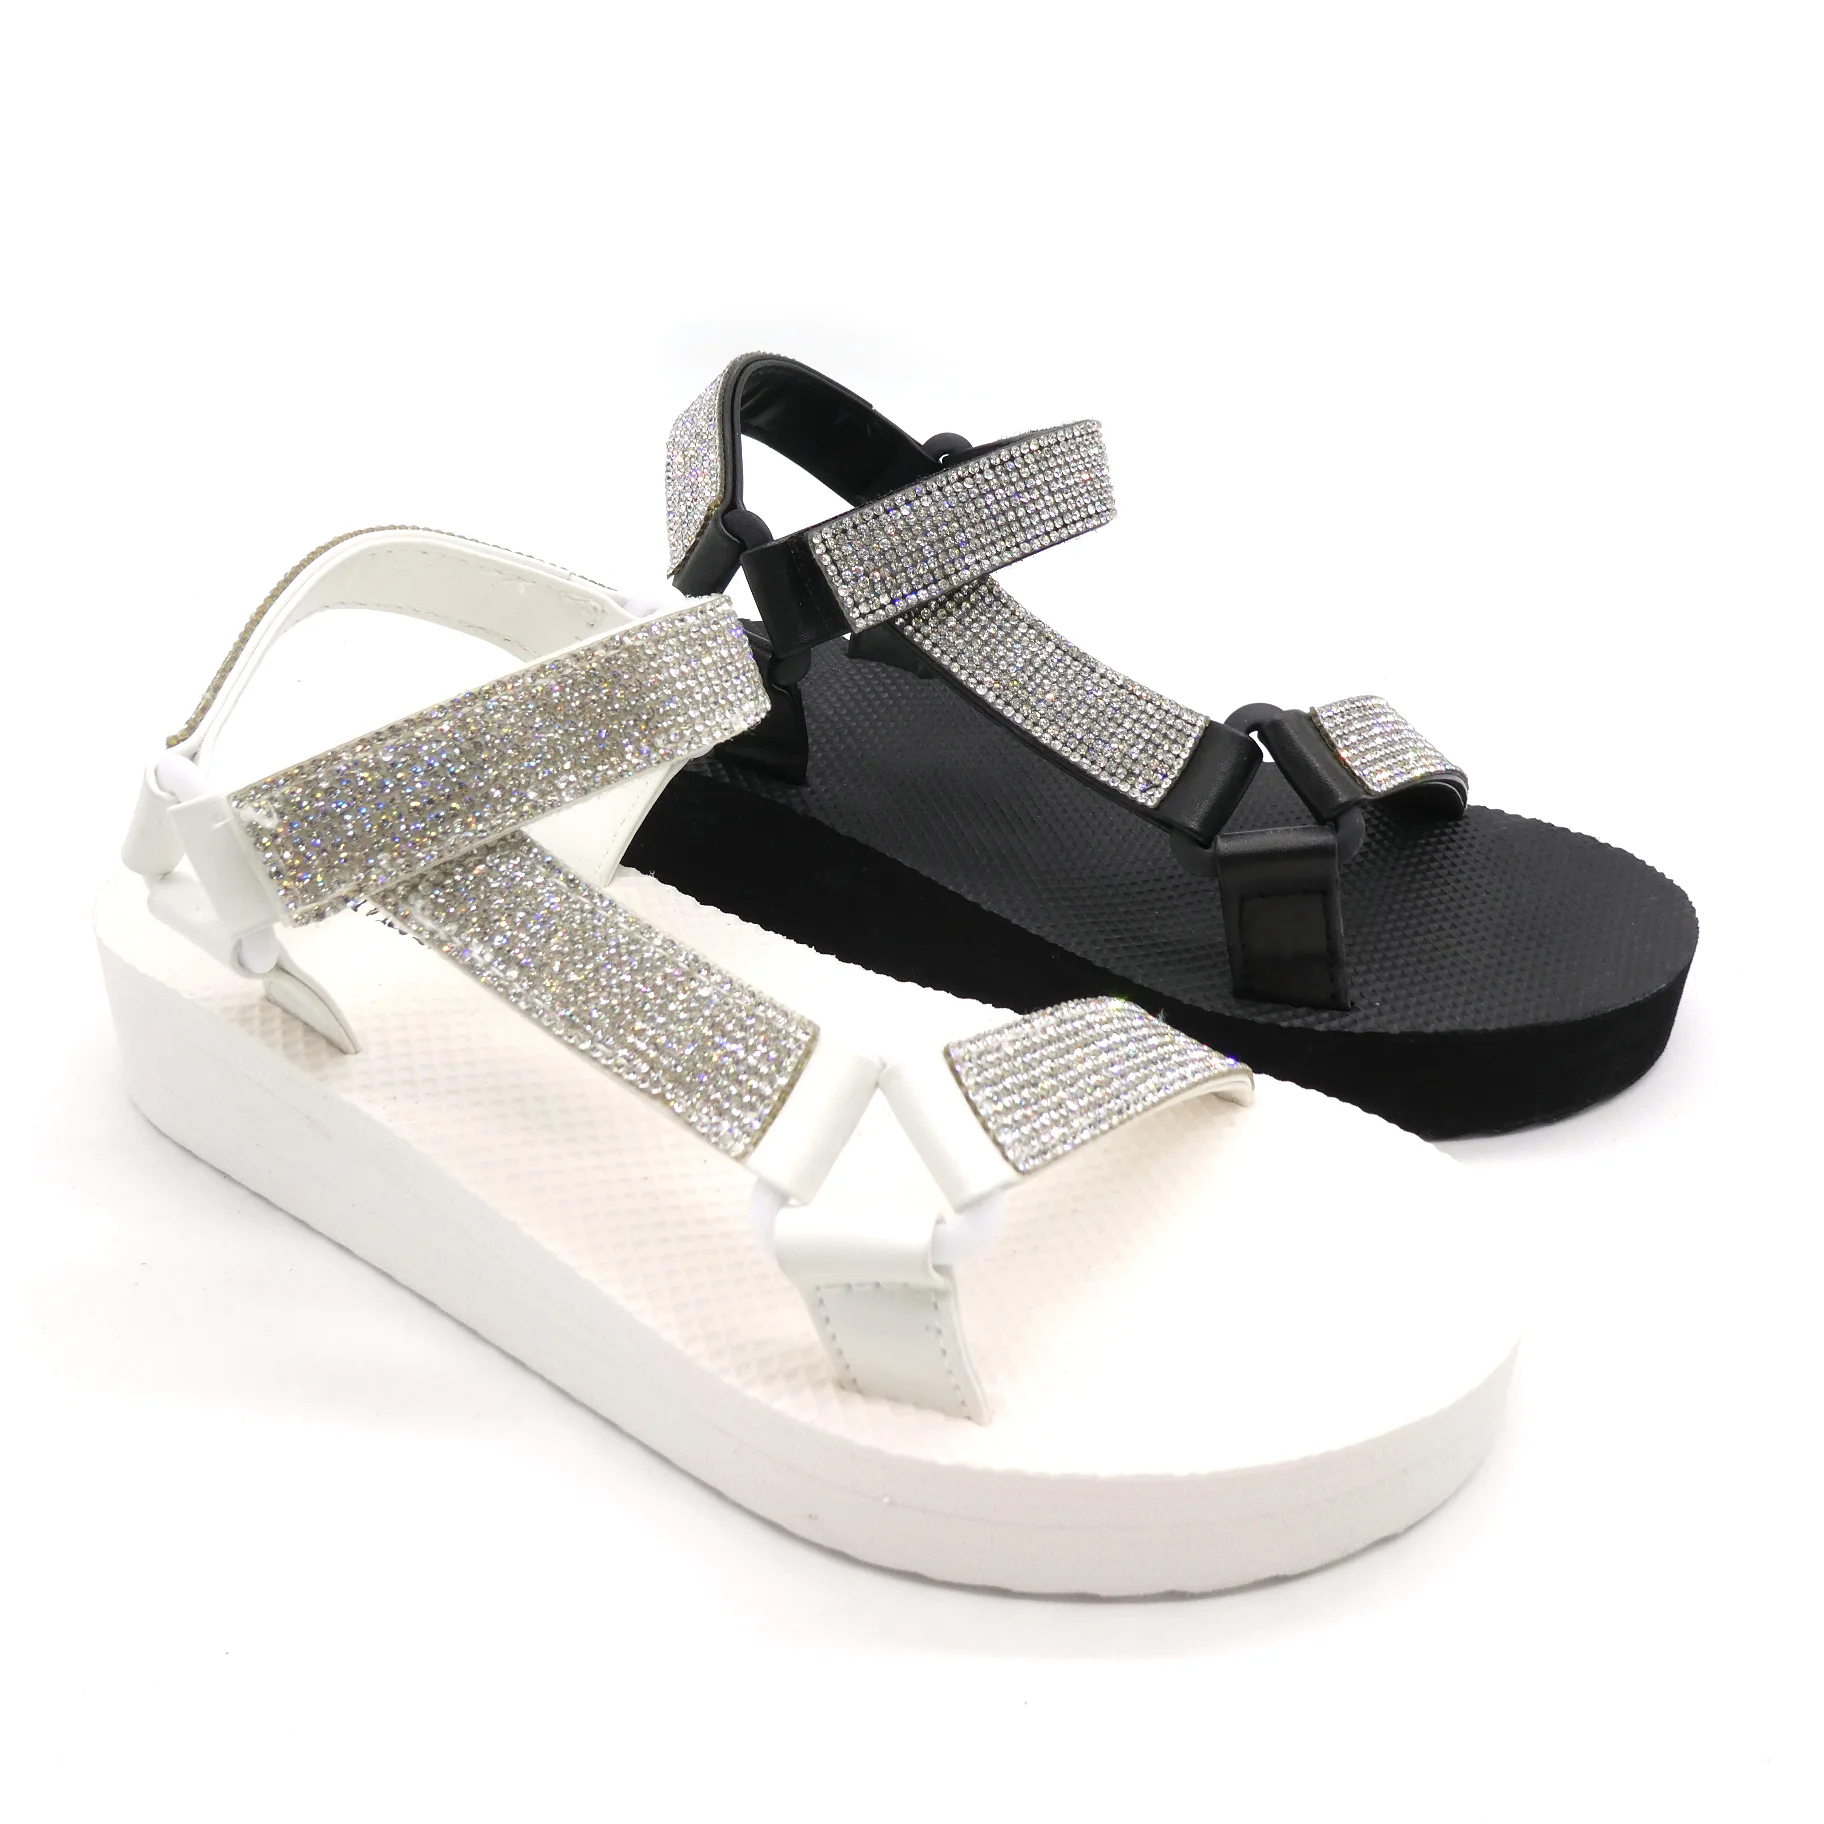 HEVA Summer Fashion Light-Weight EVA sole flat sandals women Open Toe Rhinestone Fashion Platform sandales femme